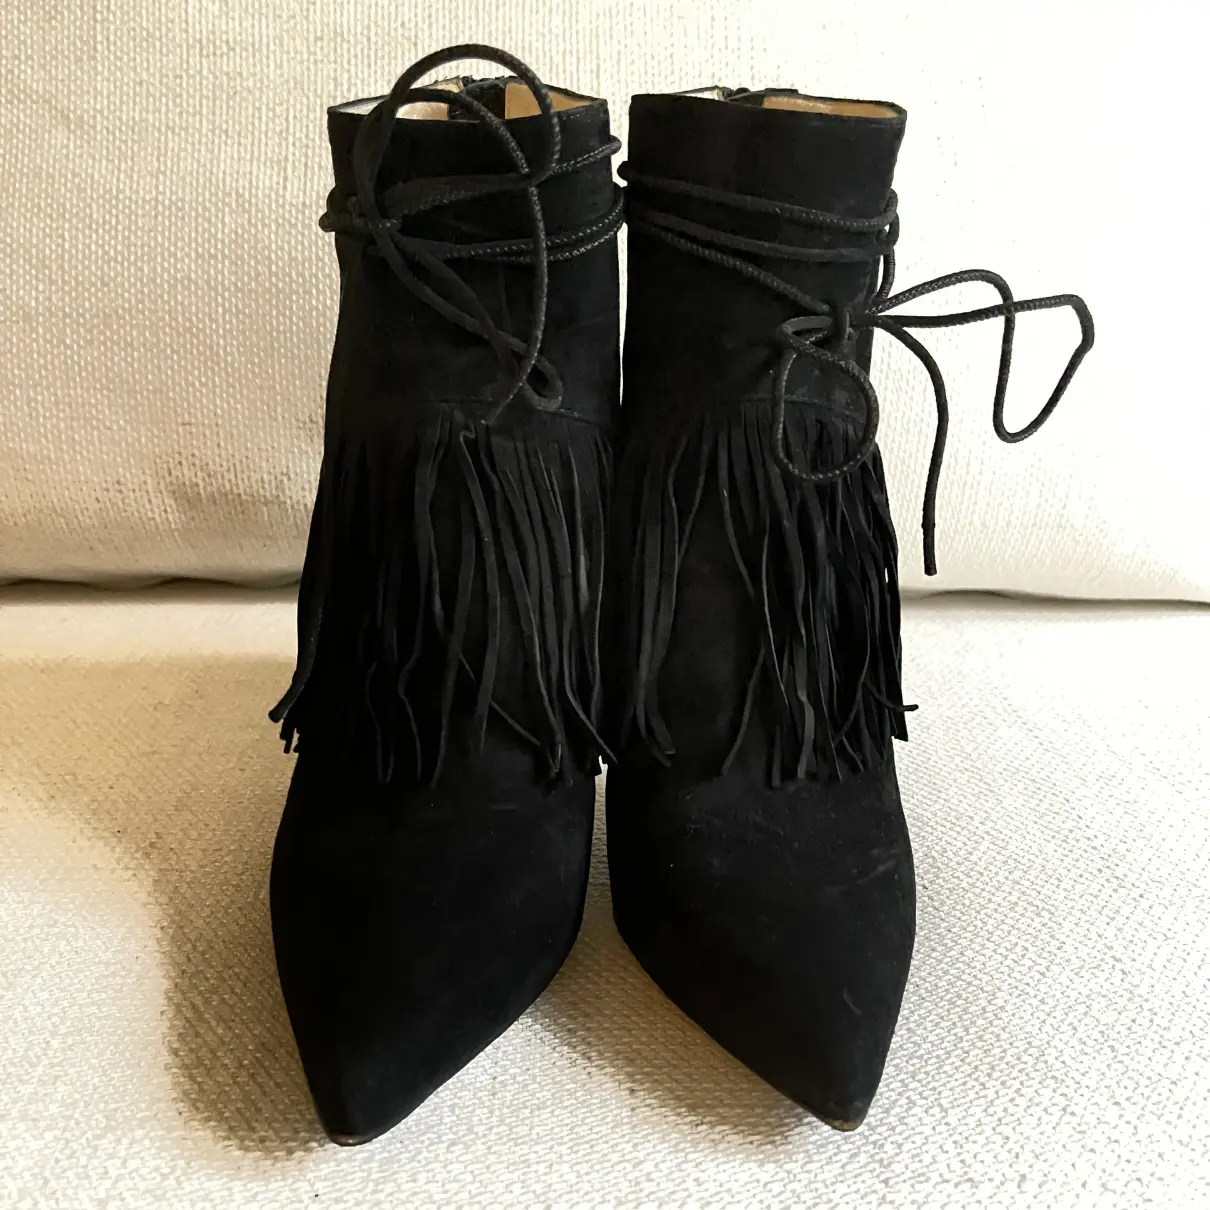 Buy Bionda Castana Ankle boots online